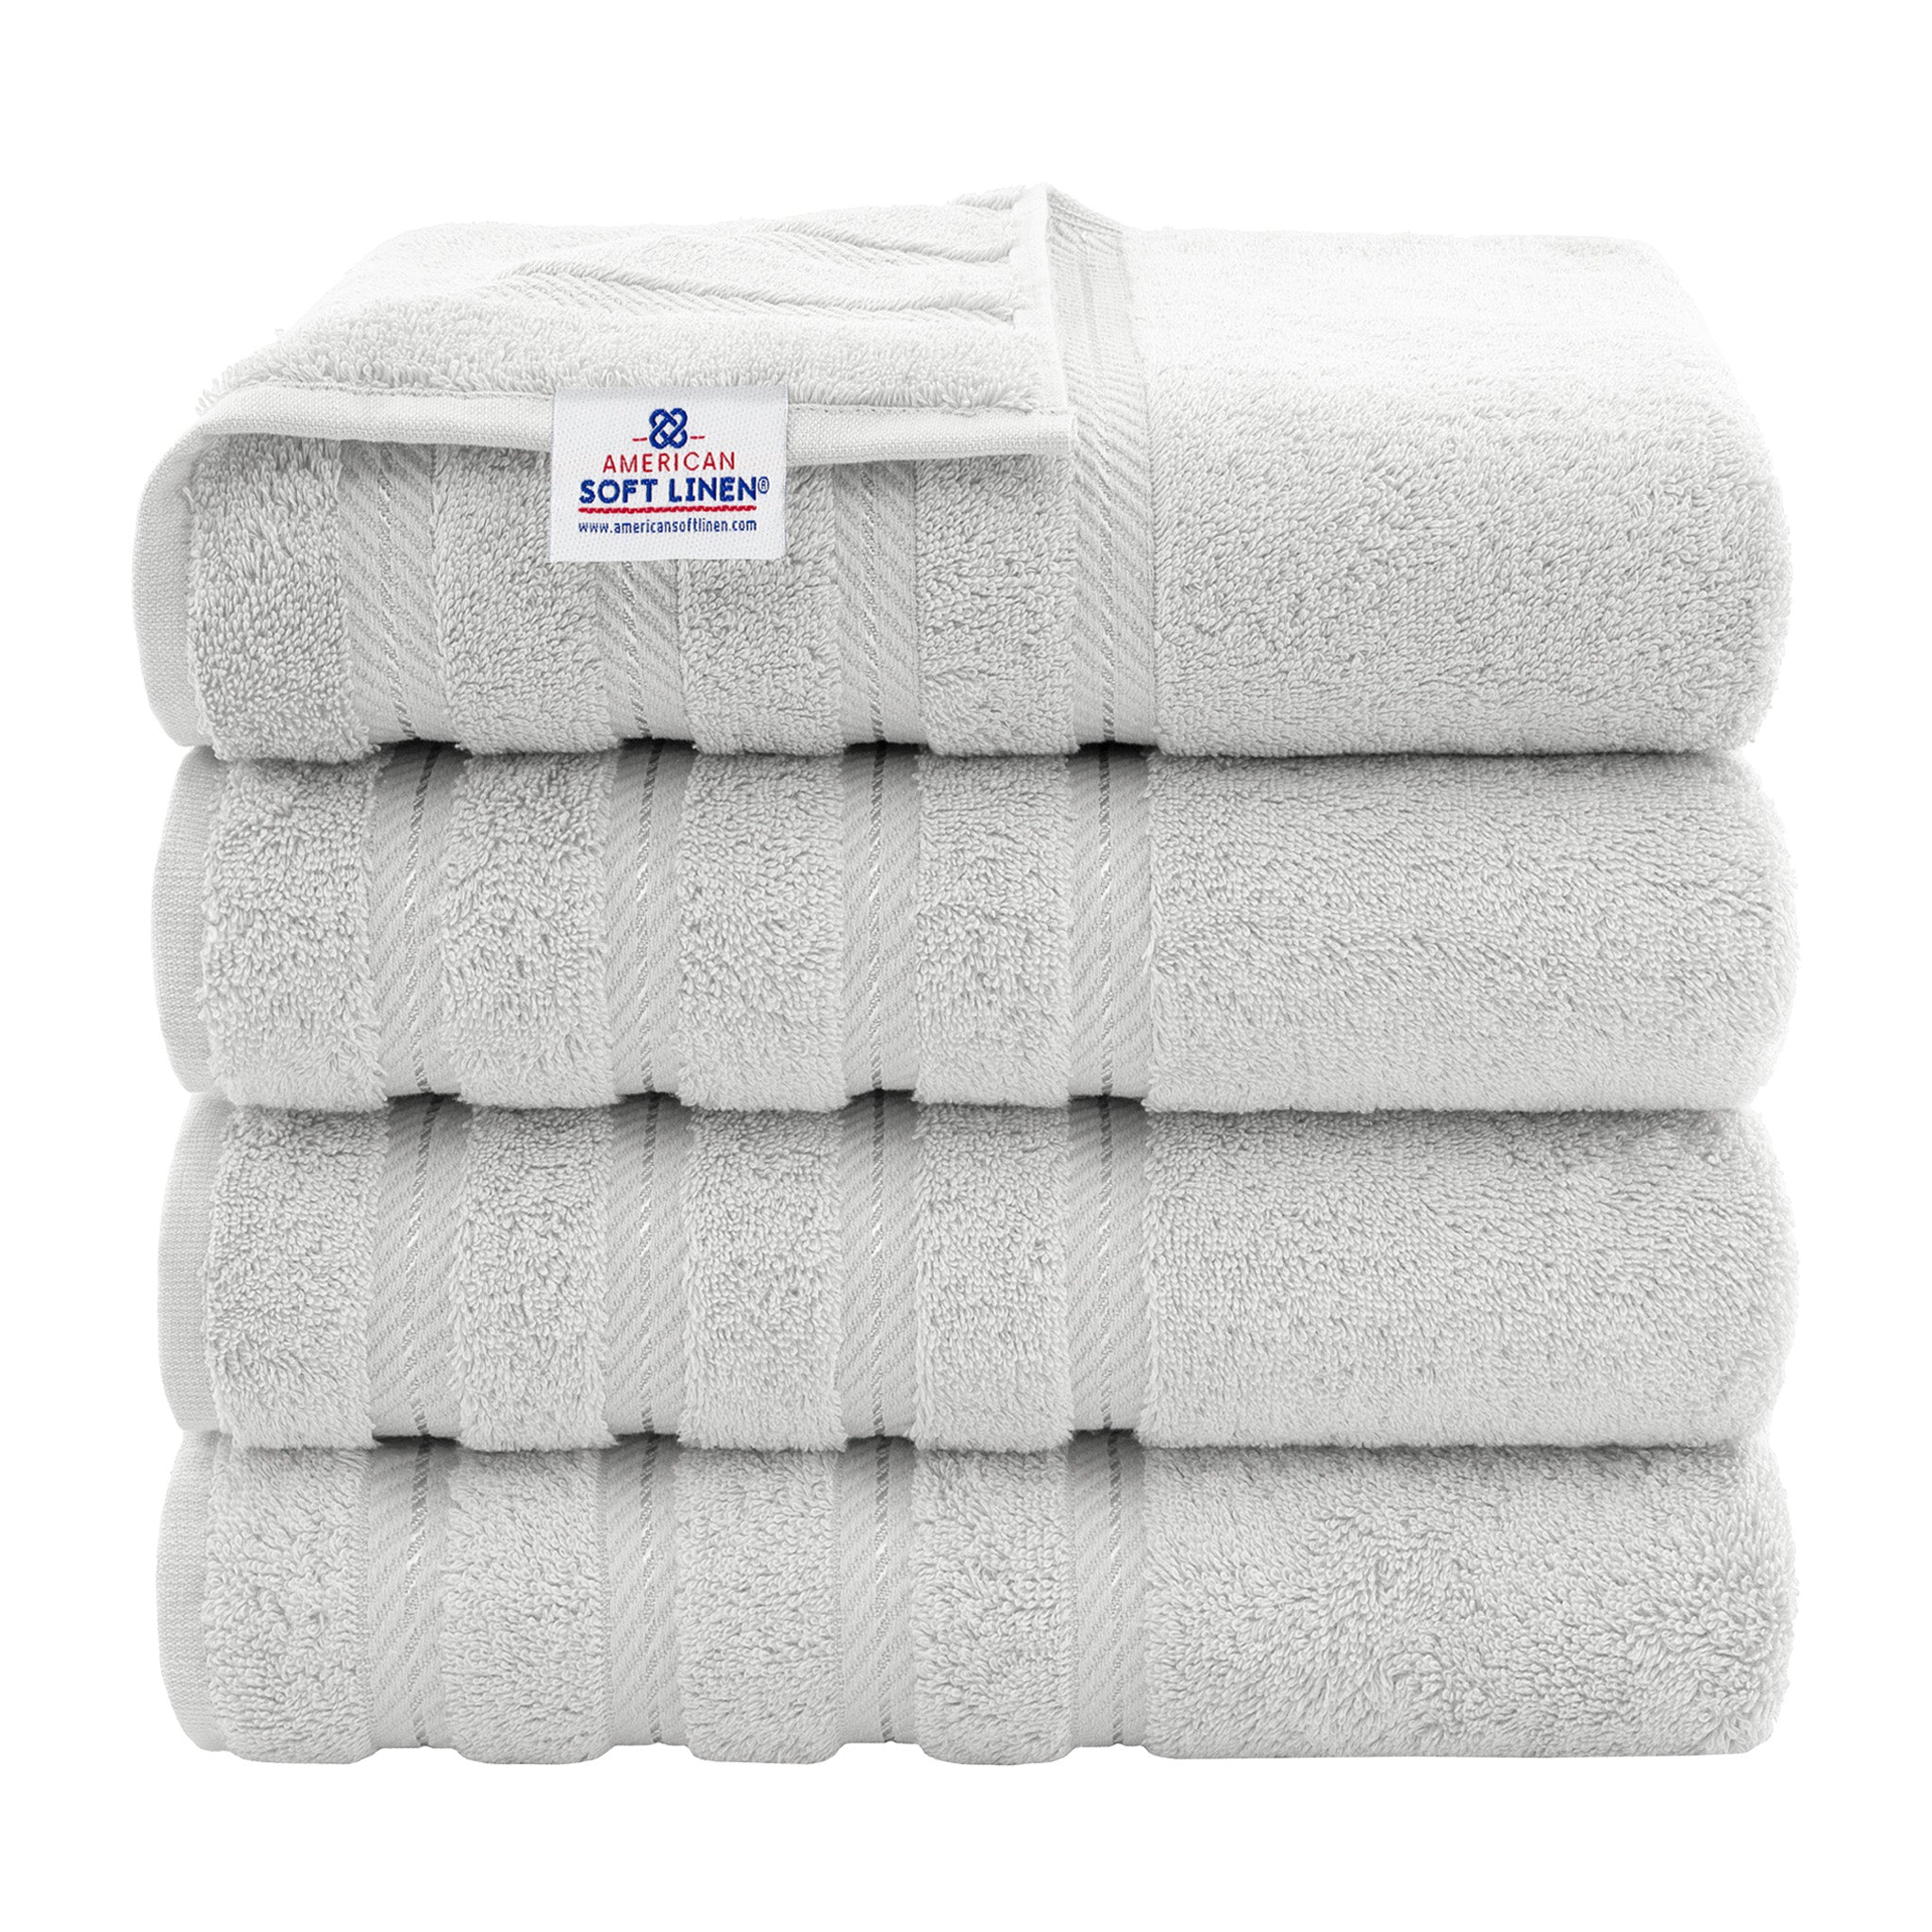 American Soft Linen 100% Turkish Cotton 4 Pack Bath Towel Set silver-gray-1